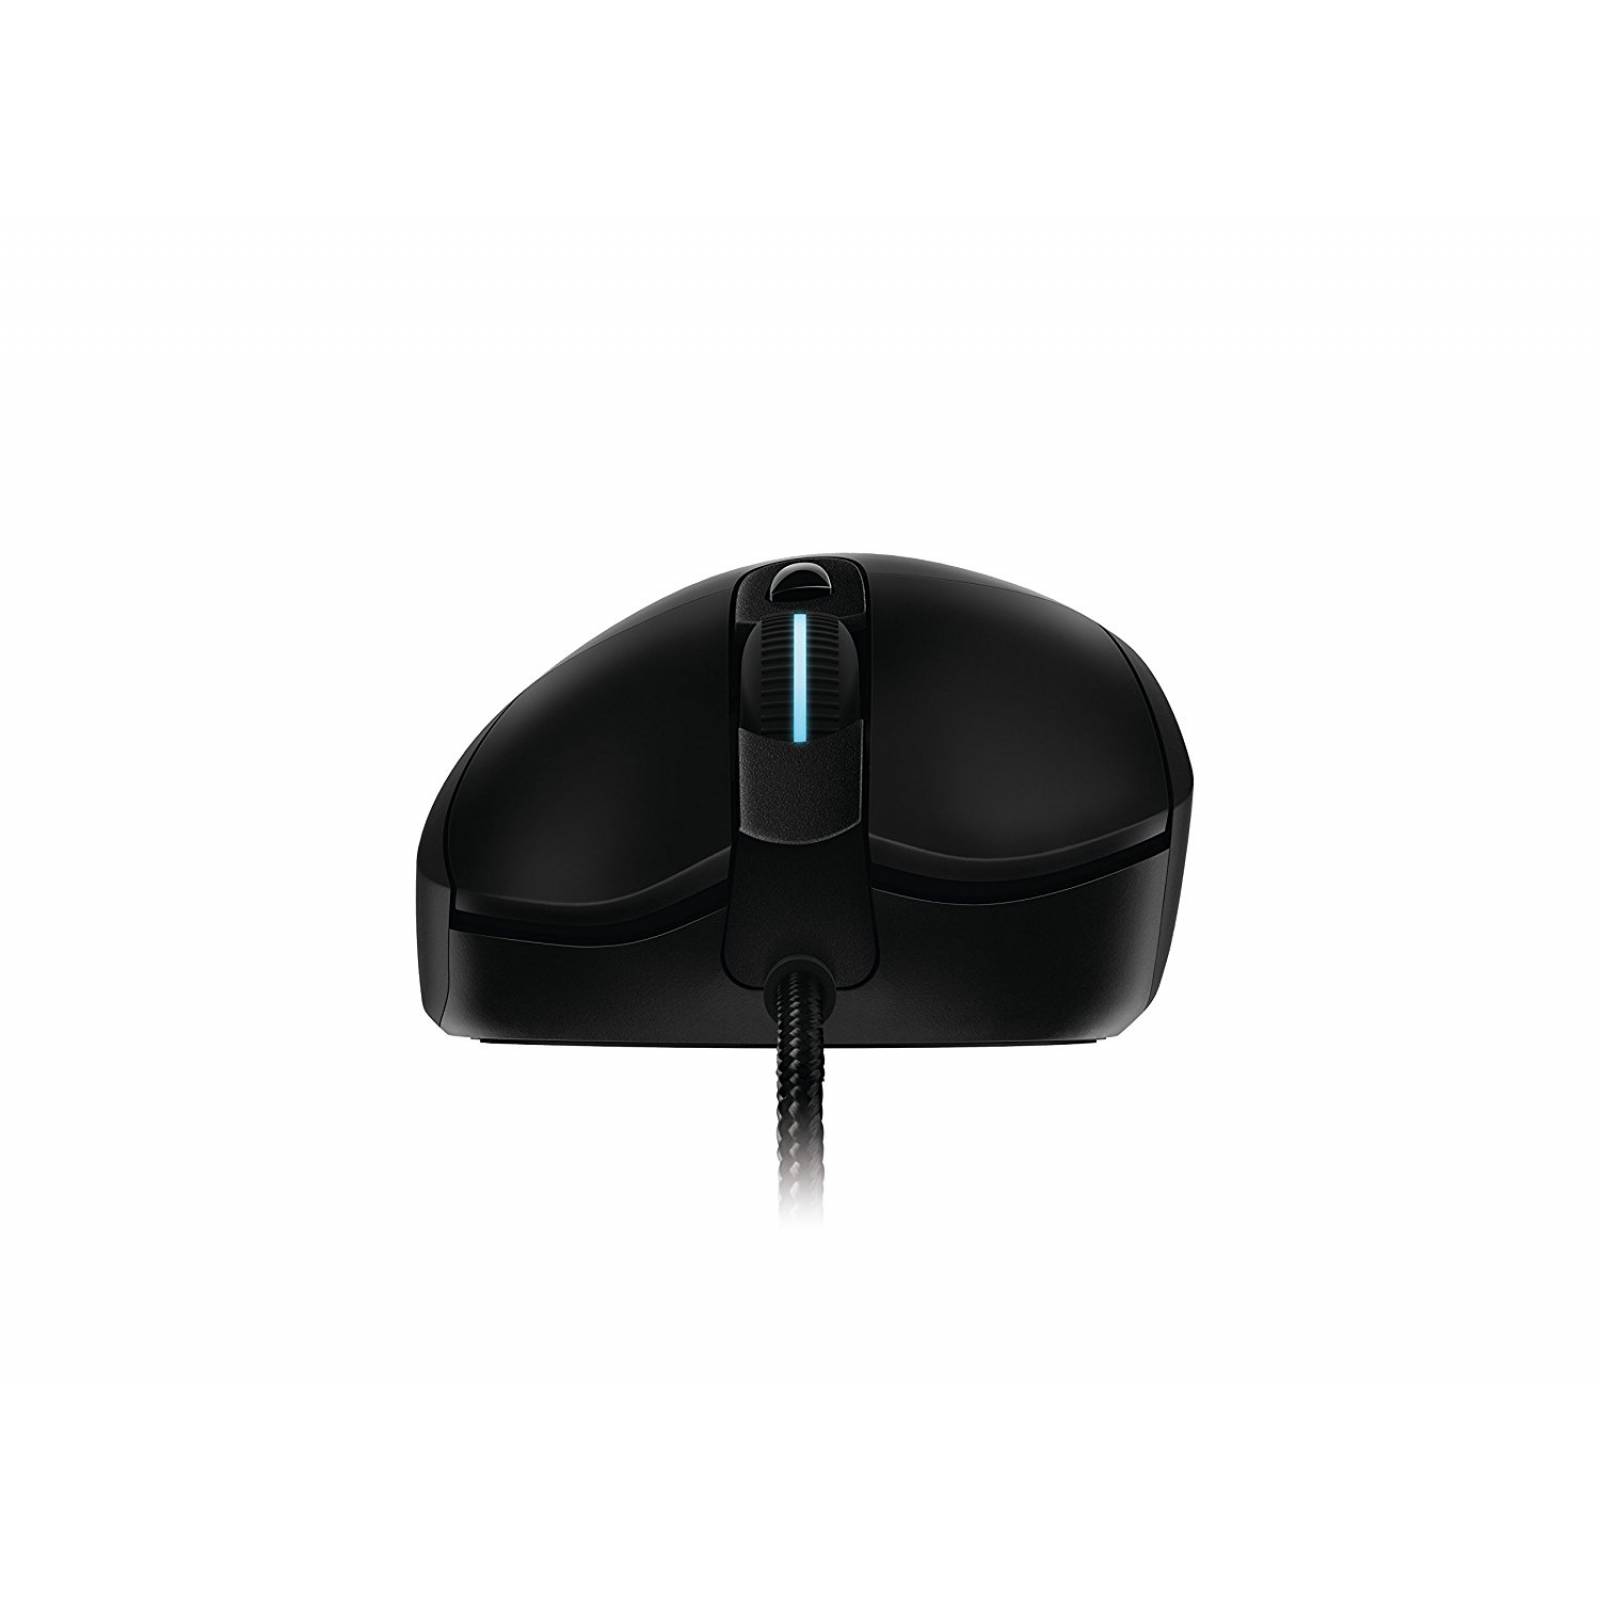 Mouse Gaming Logitech G403 Prodigy USB 12000 DPI Iluminación RGB Negro